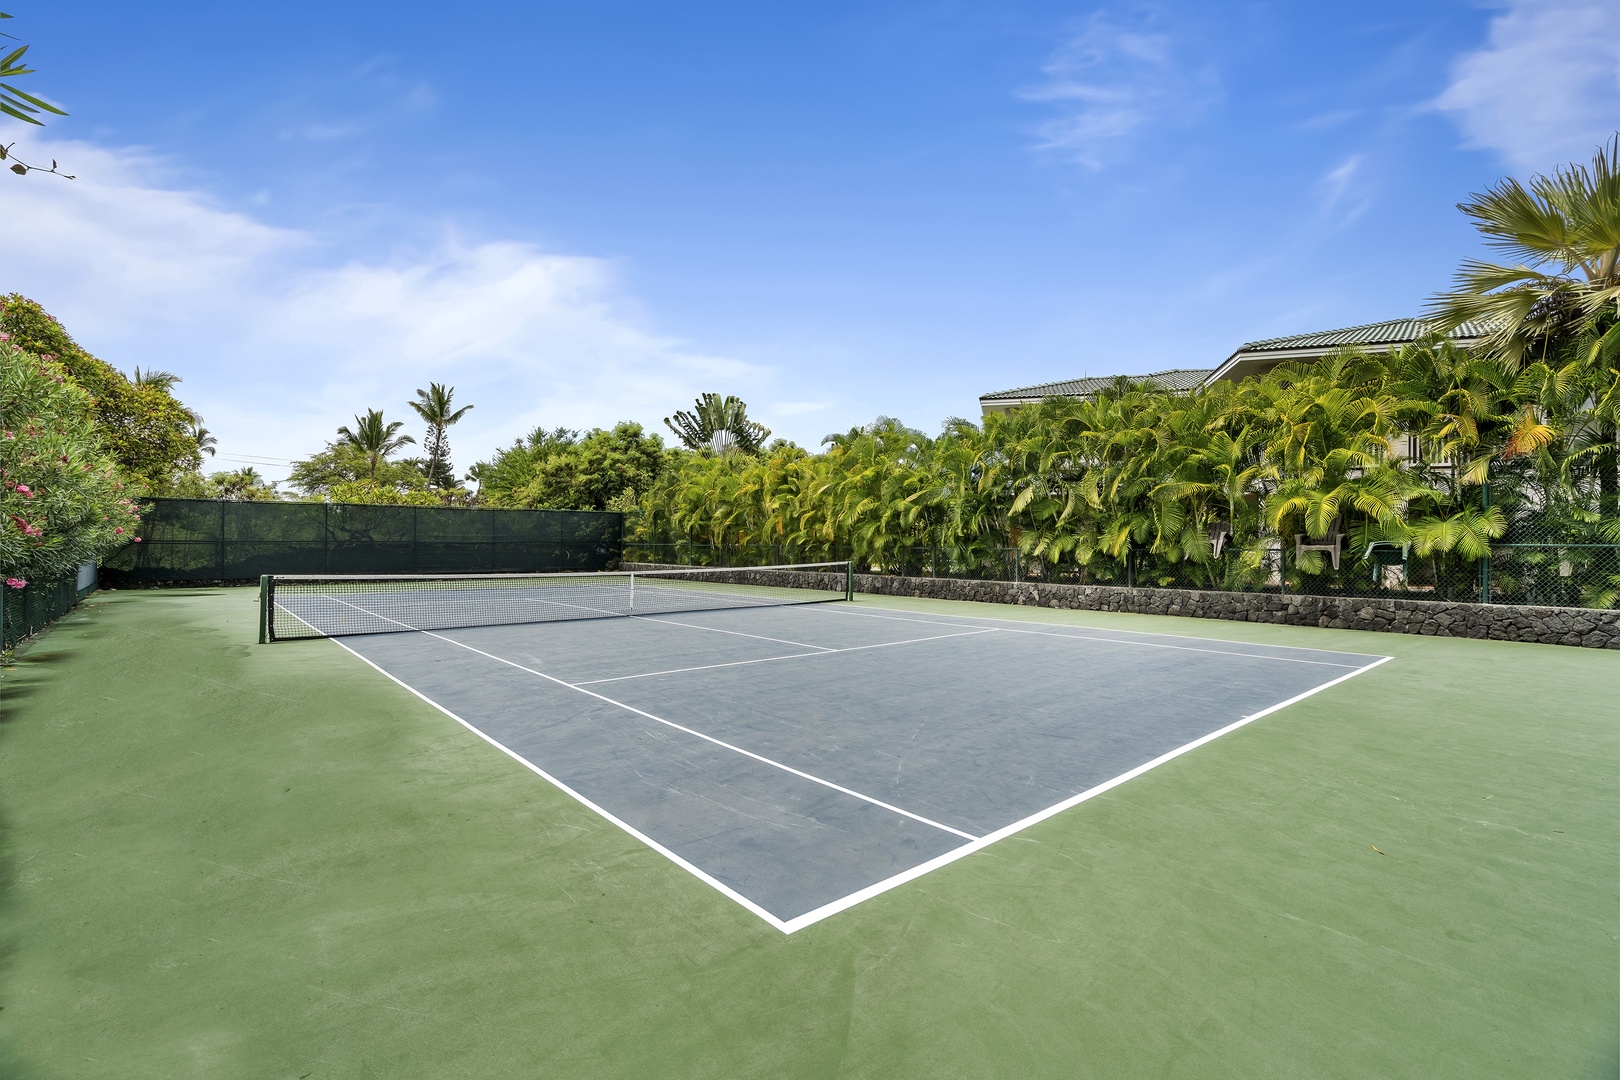 Kailua Kona Vacation Rentals, Ali'i Point #12 - Community Tennis Courts!